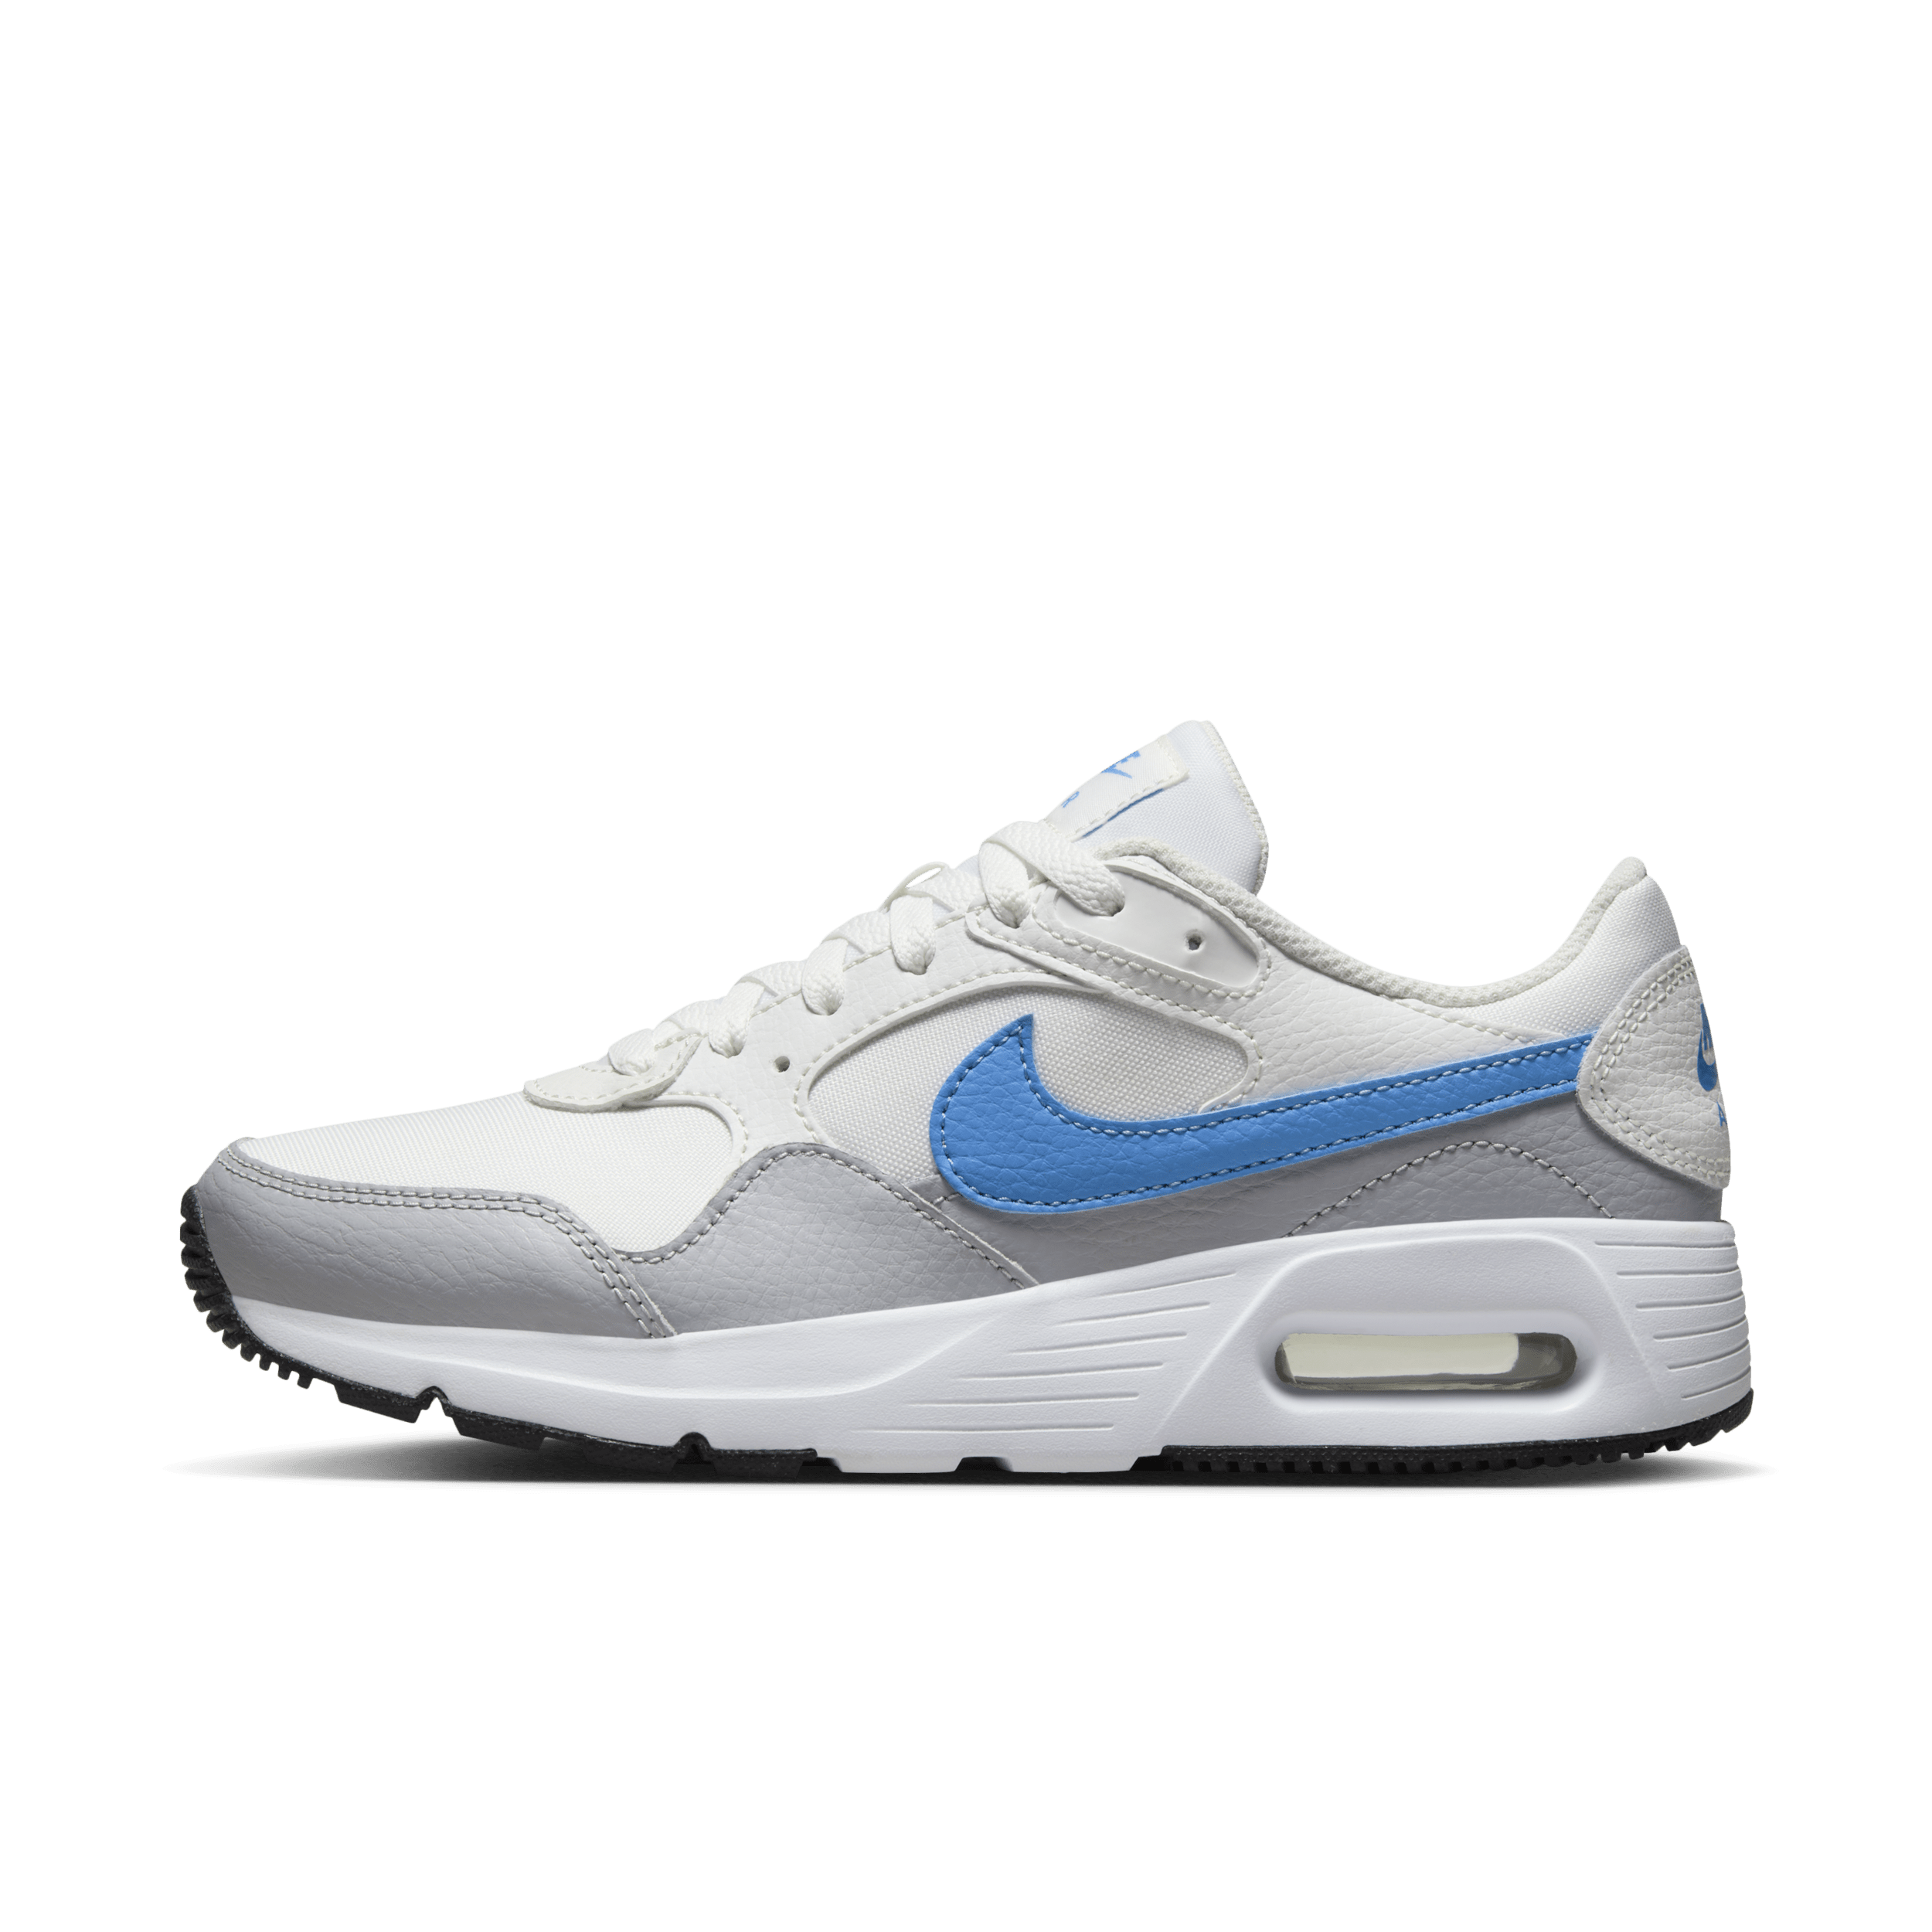 Nike Air Max SC-sko til kvinder - hvid